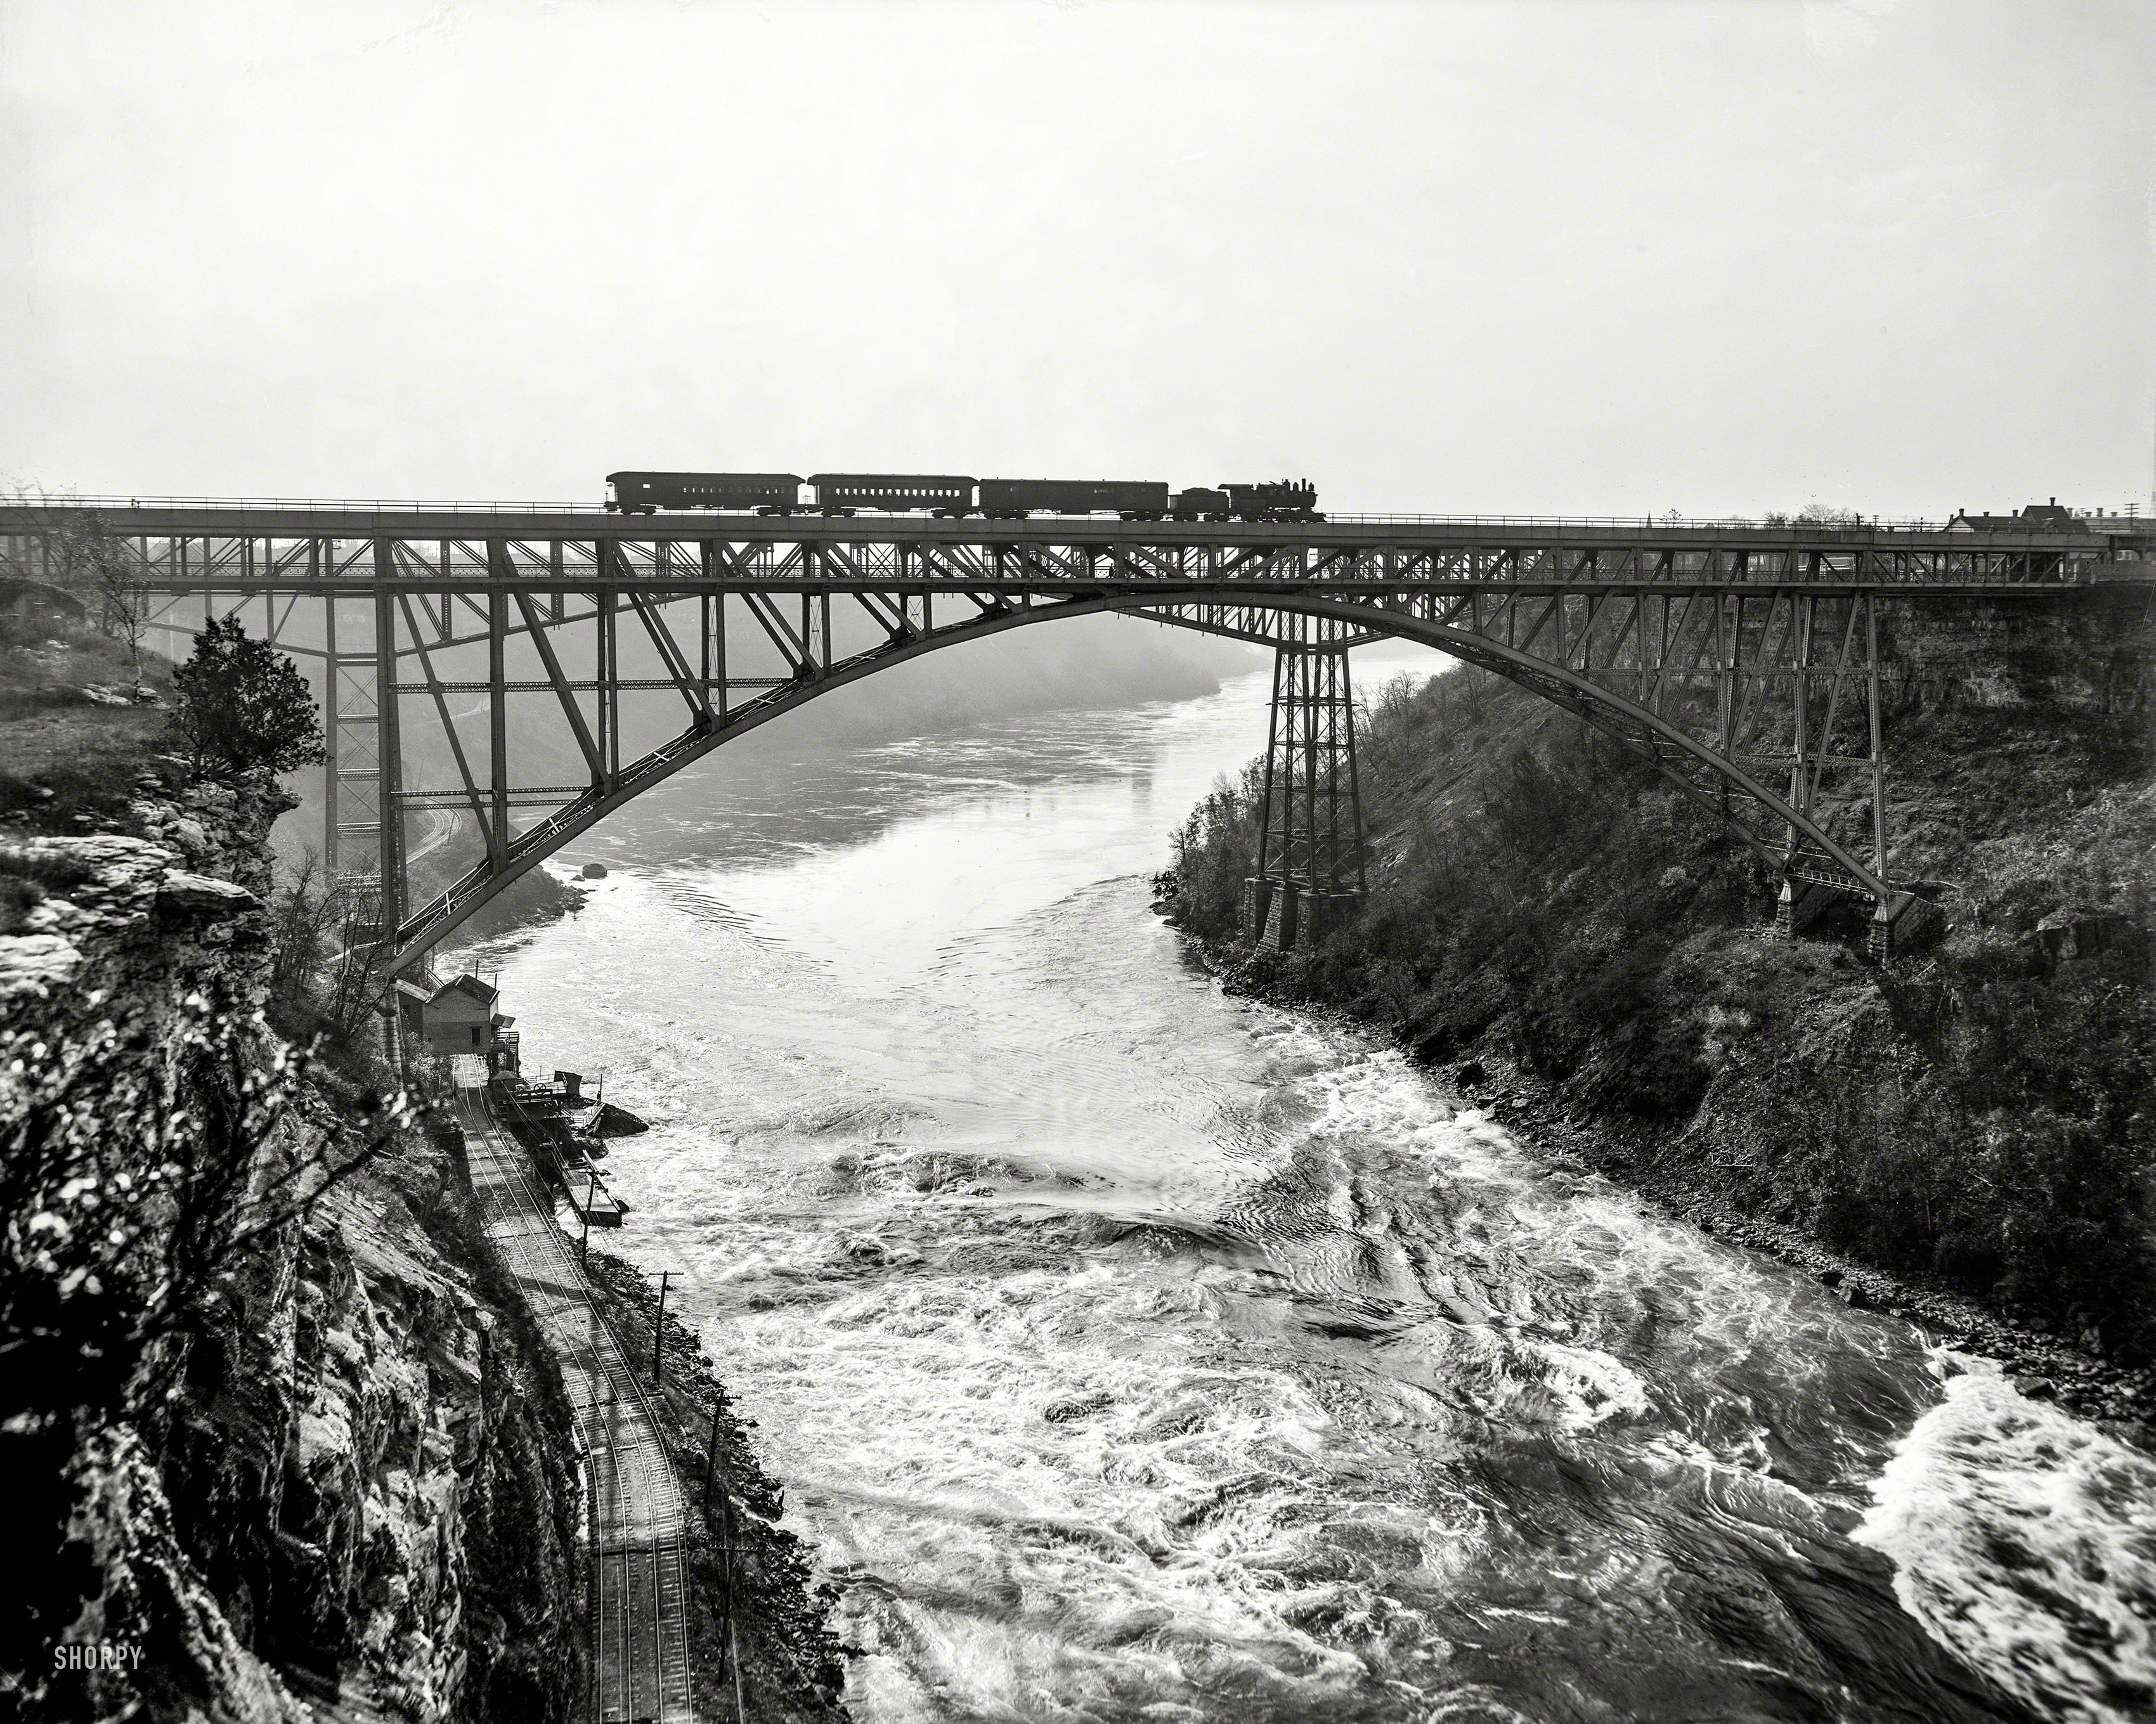 Circa 1900. "Niagara Falls, New York. Whirlpool Rapids (Grand Trunk Railway) Bridge with Michigan Central Cantilever Bridge in background." 8x10 inch dry plate glass negative, Detroit Publishing Company. View full size.